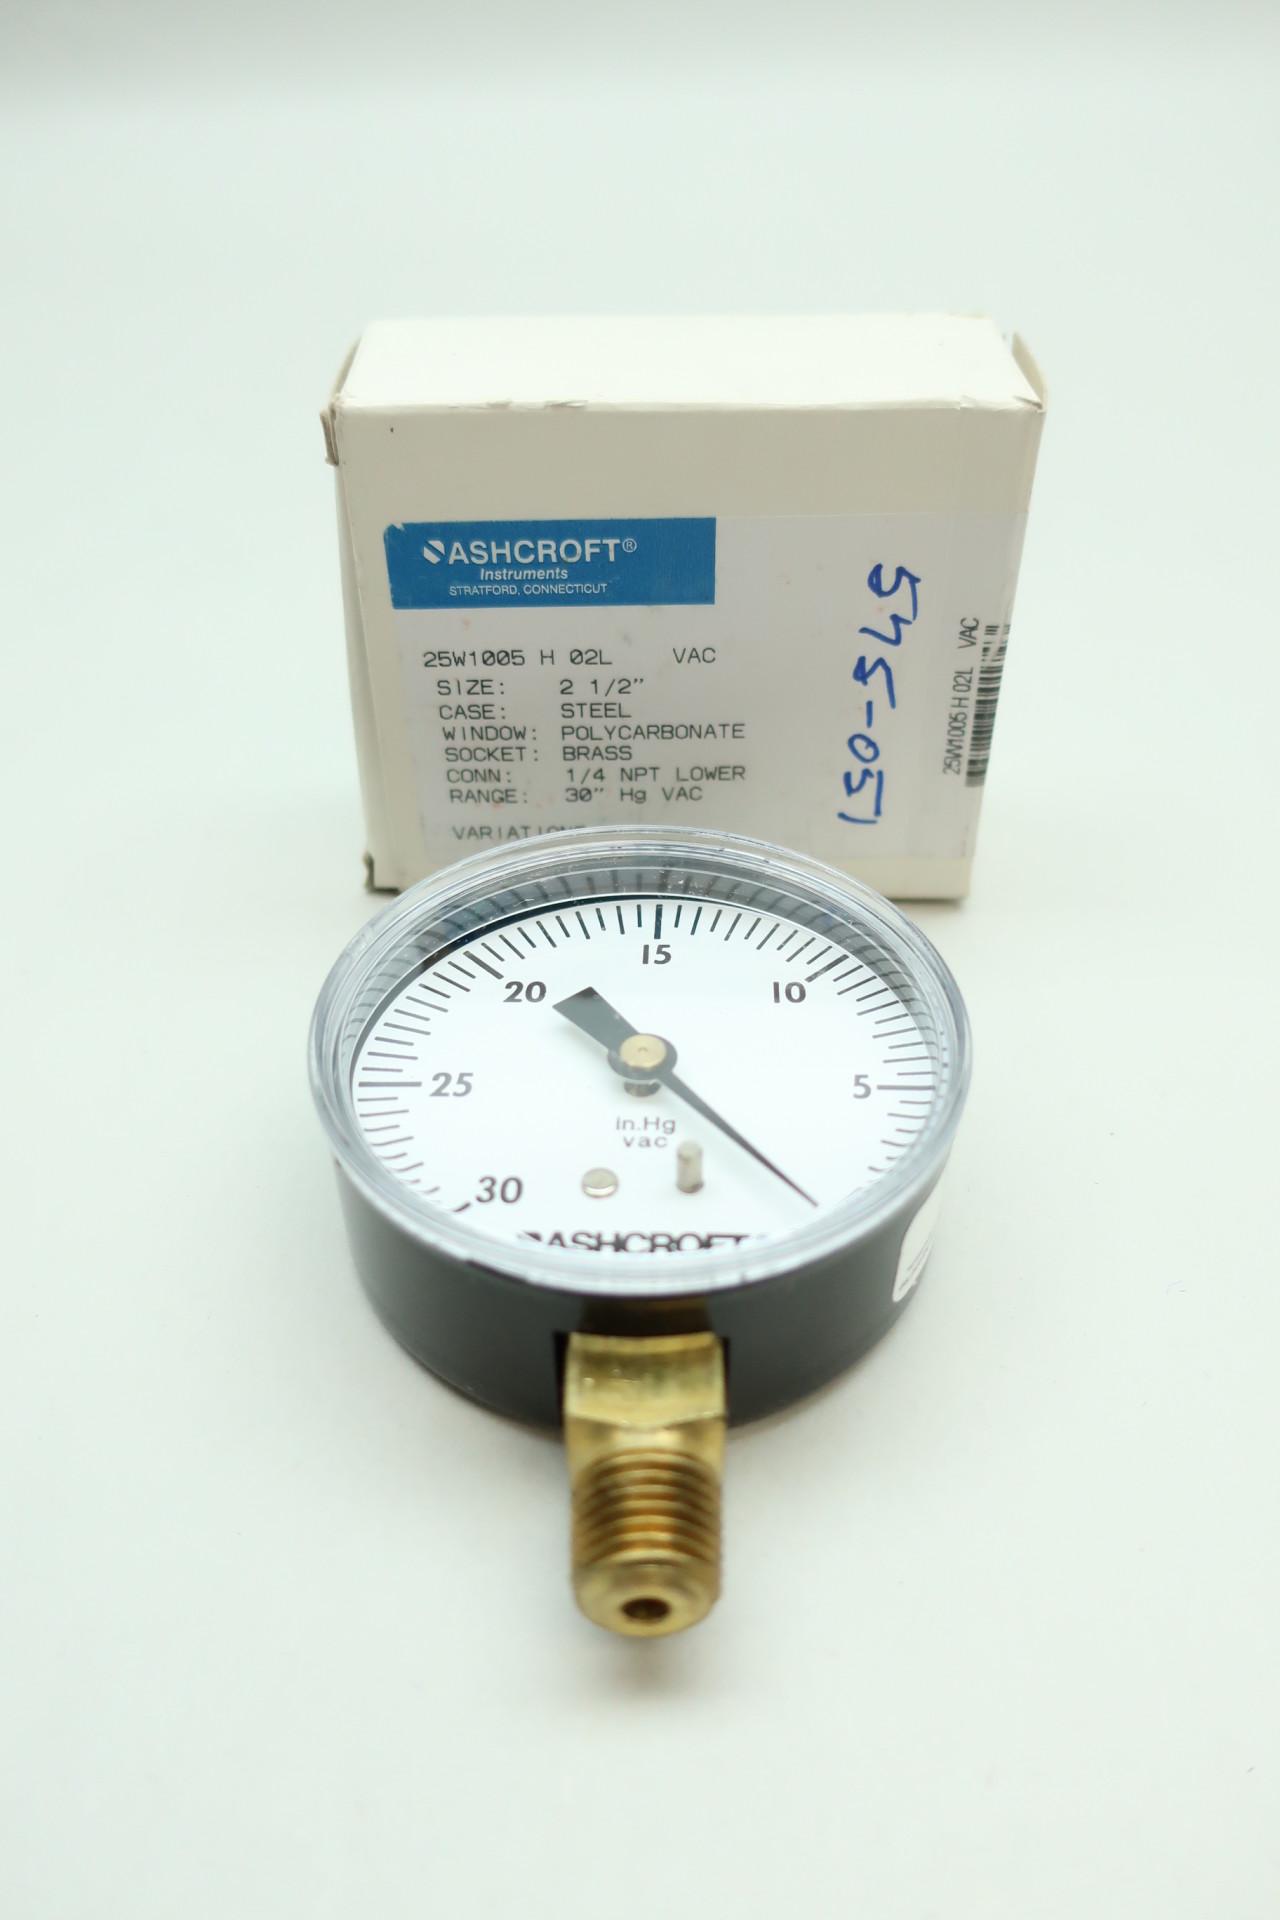 ASHCROFT 25W1005 H 02L VAC Pressure Gauge 2-1/2" Range 0-30 